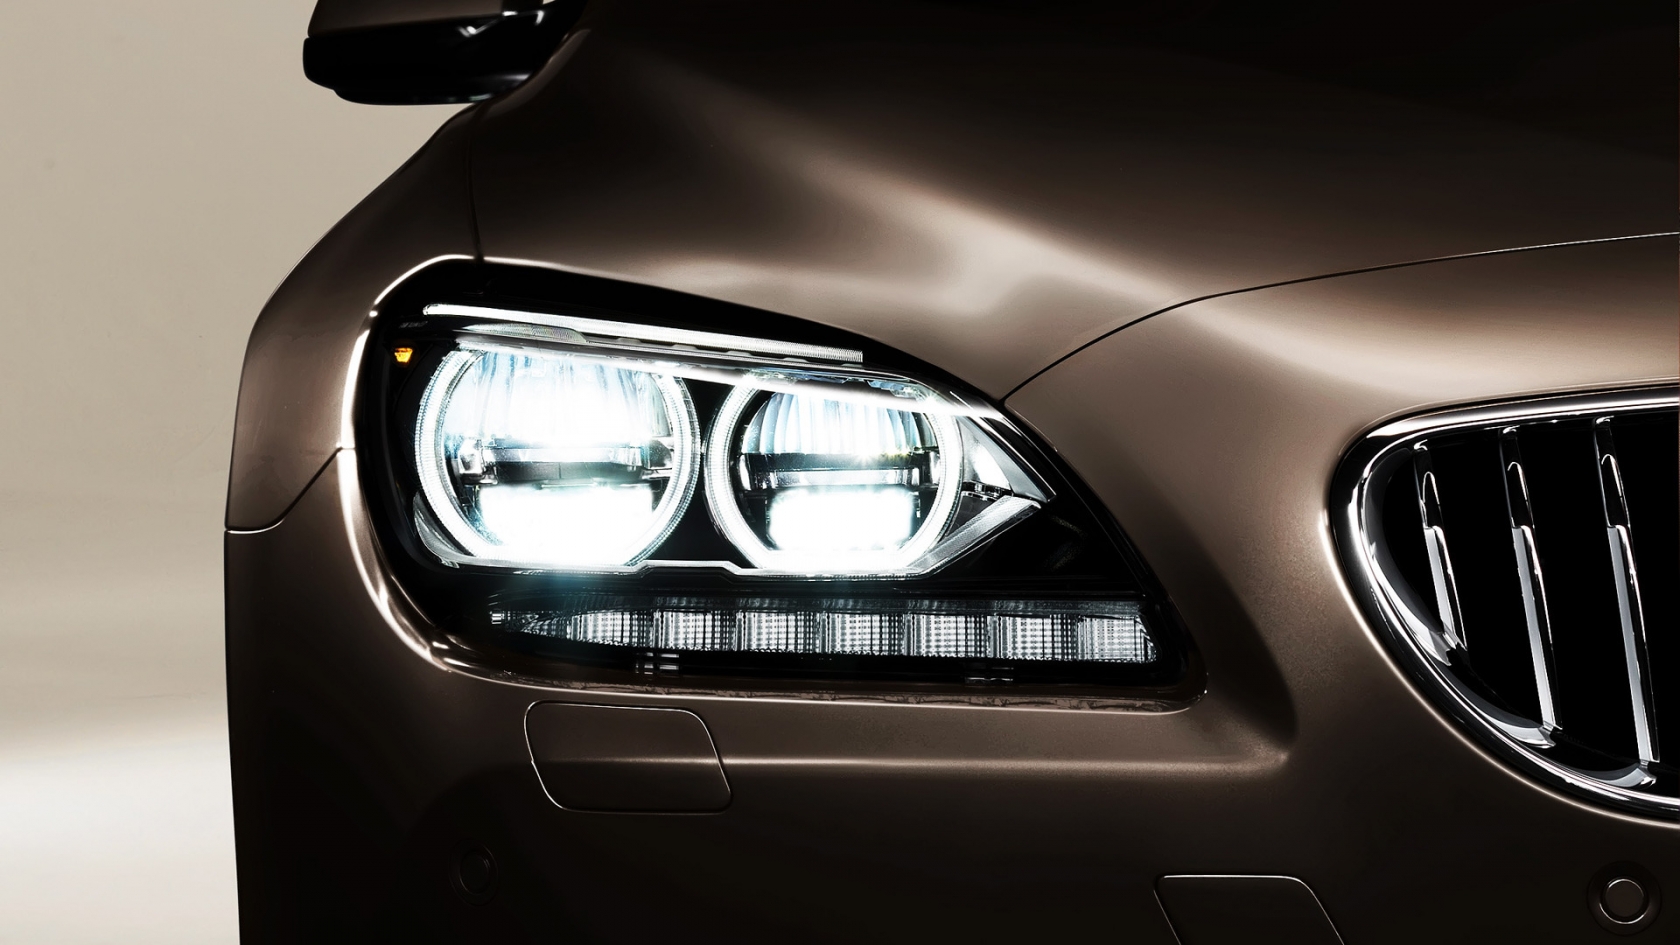 BMW 6 Series 2013 Headlight for 1680 x 945 HDTV resolution